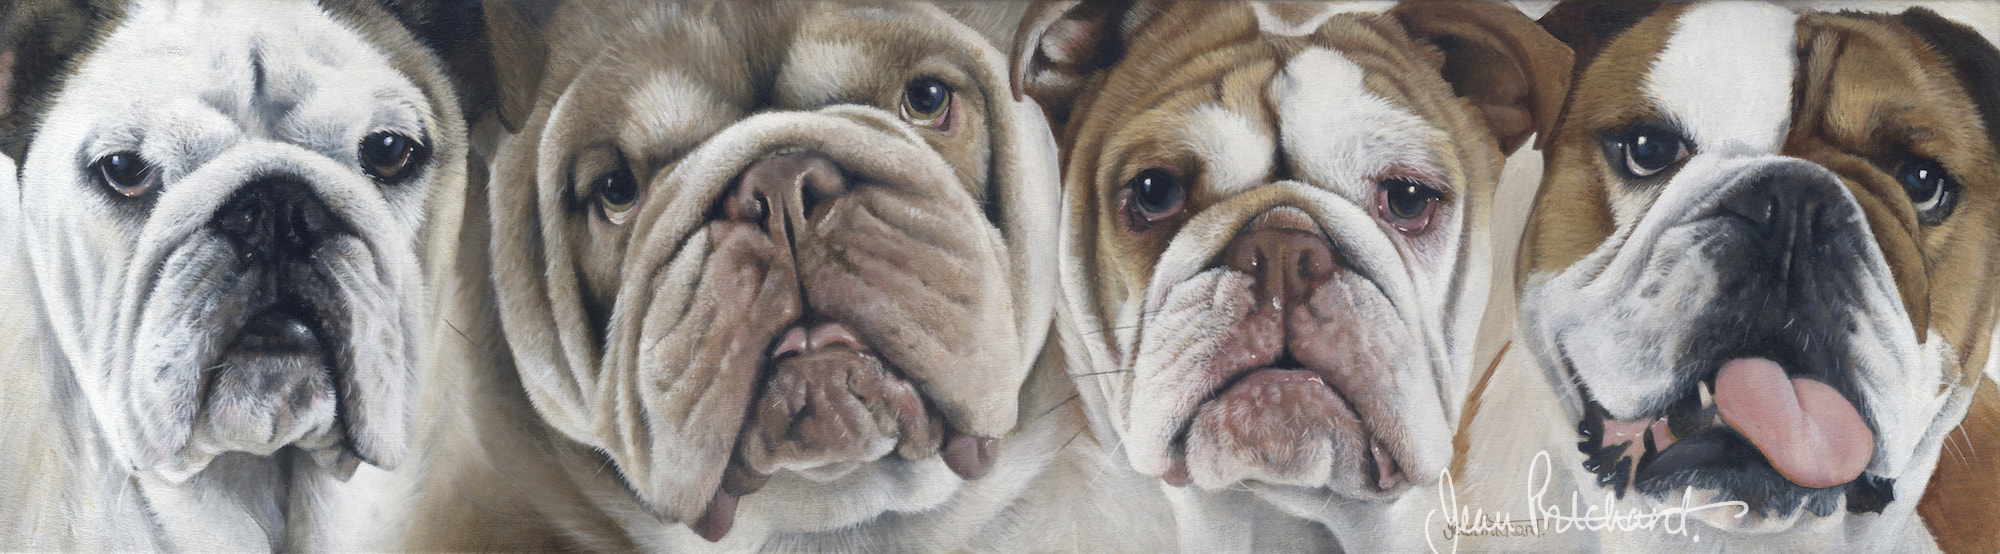 bulldogs, pet portrait, jean pritchard, wildlife artist 